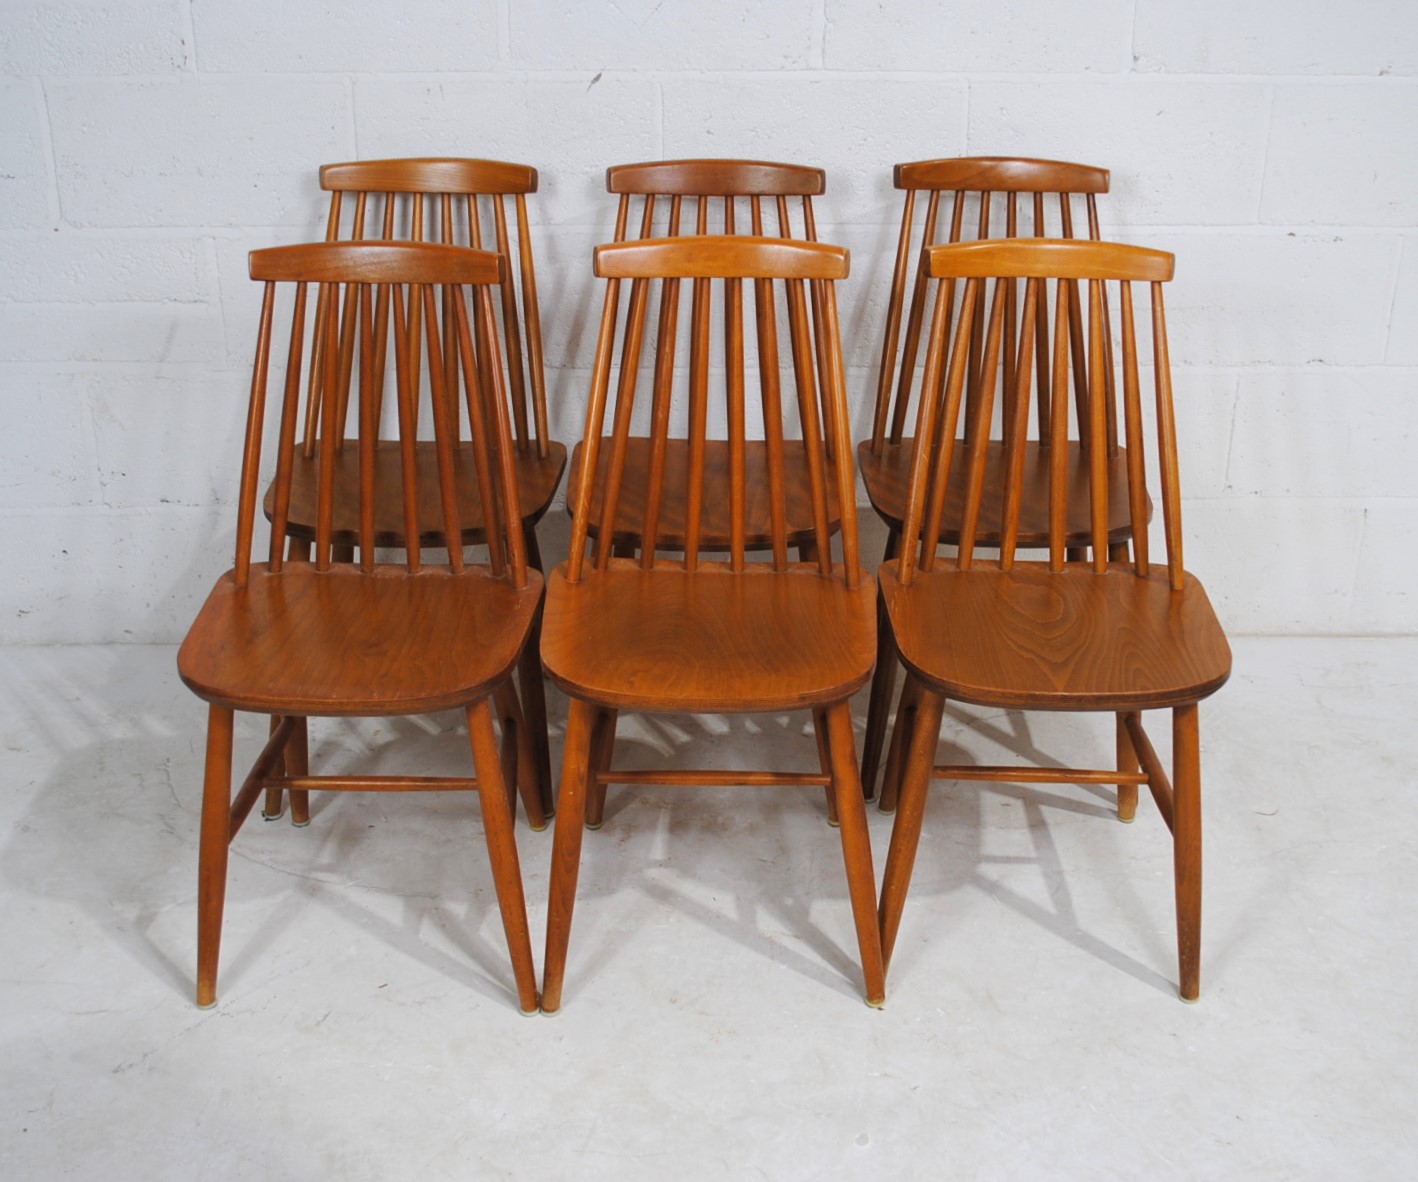 A set of six Ercol style stick-back chairs